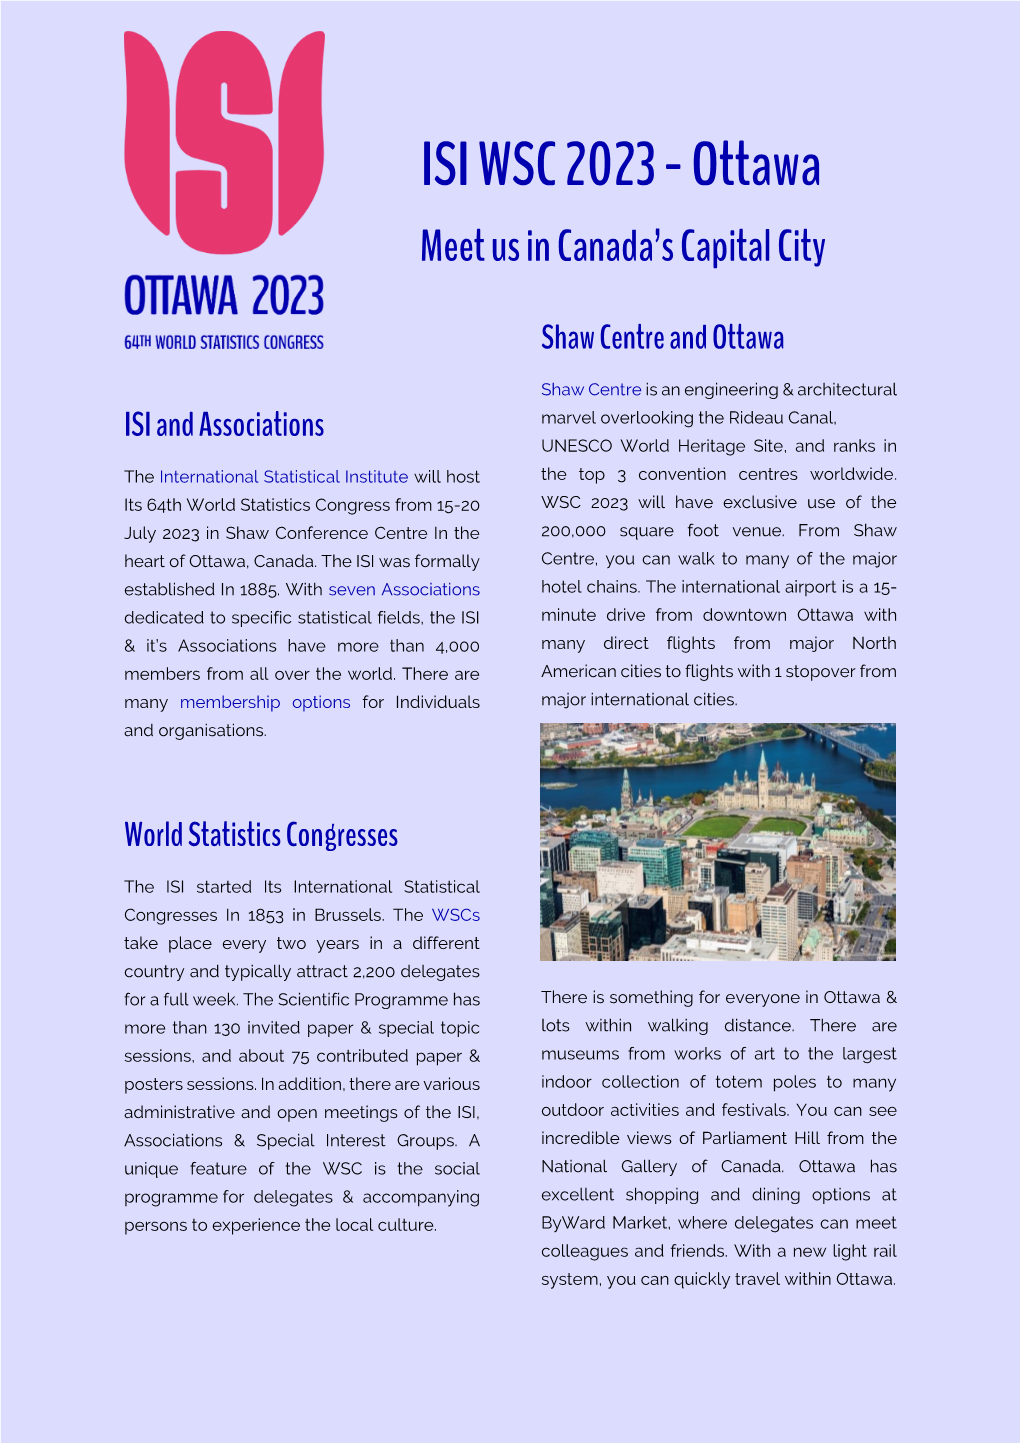 WSC 2023 - Ottawa Meet Us in Canada’S Capital City